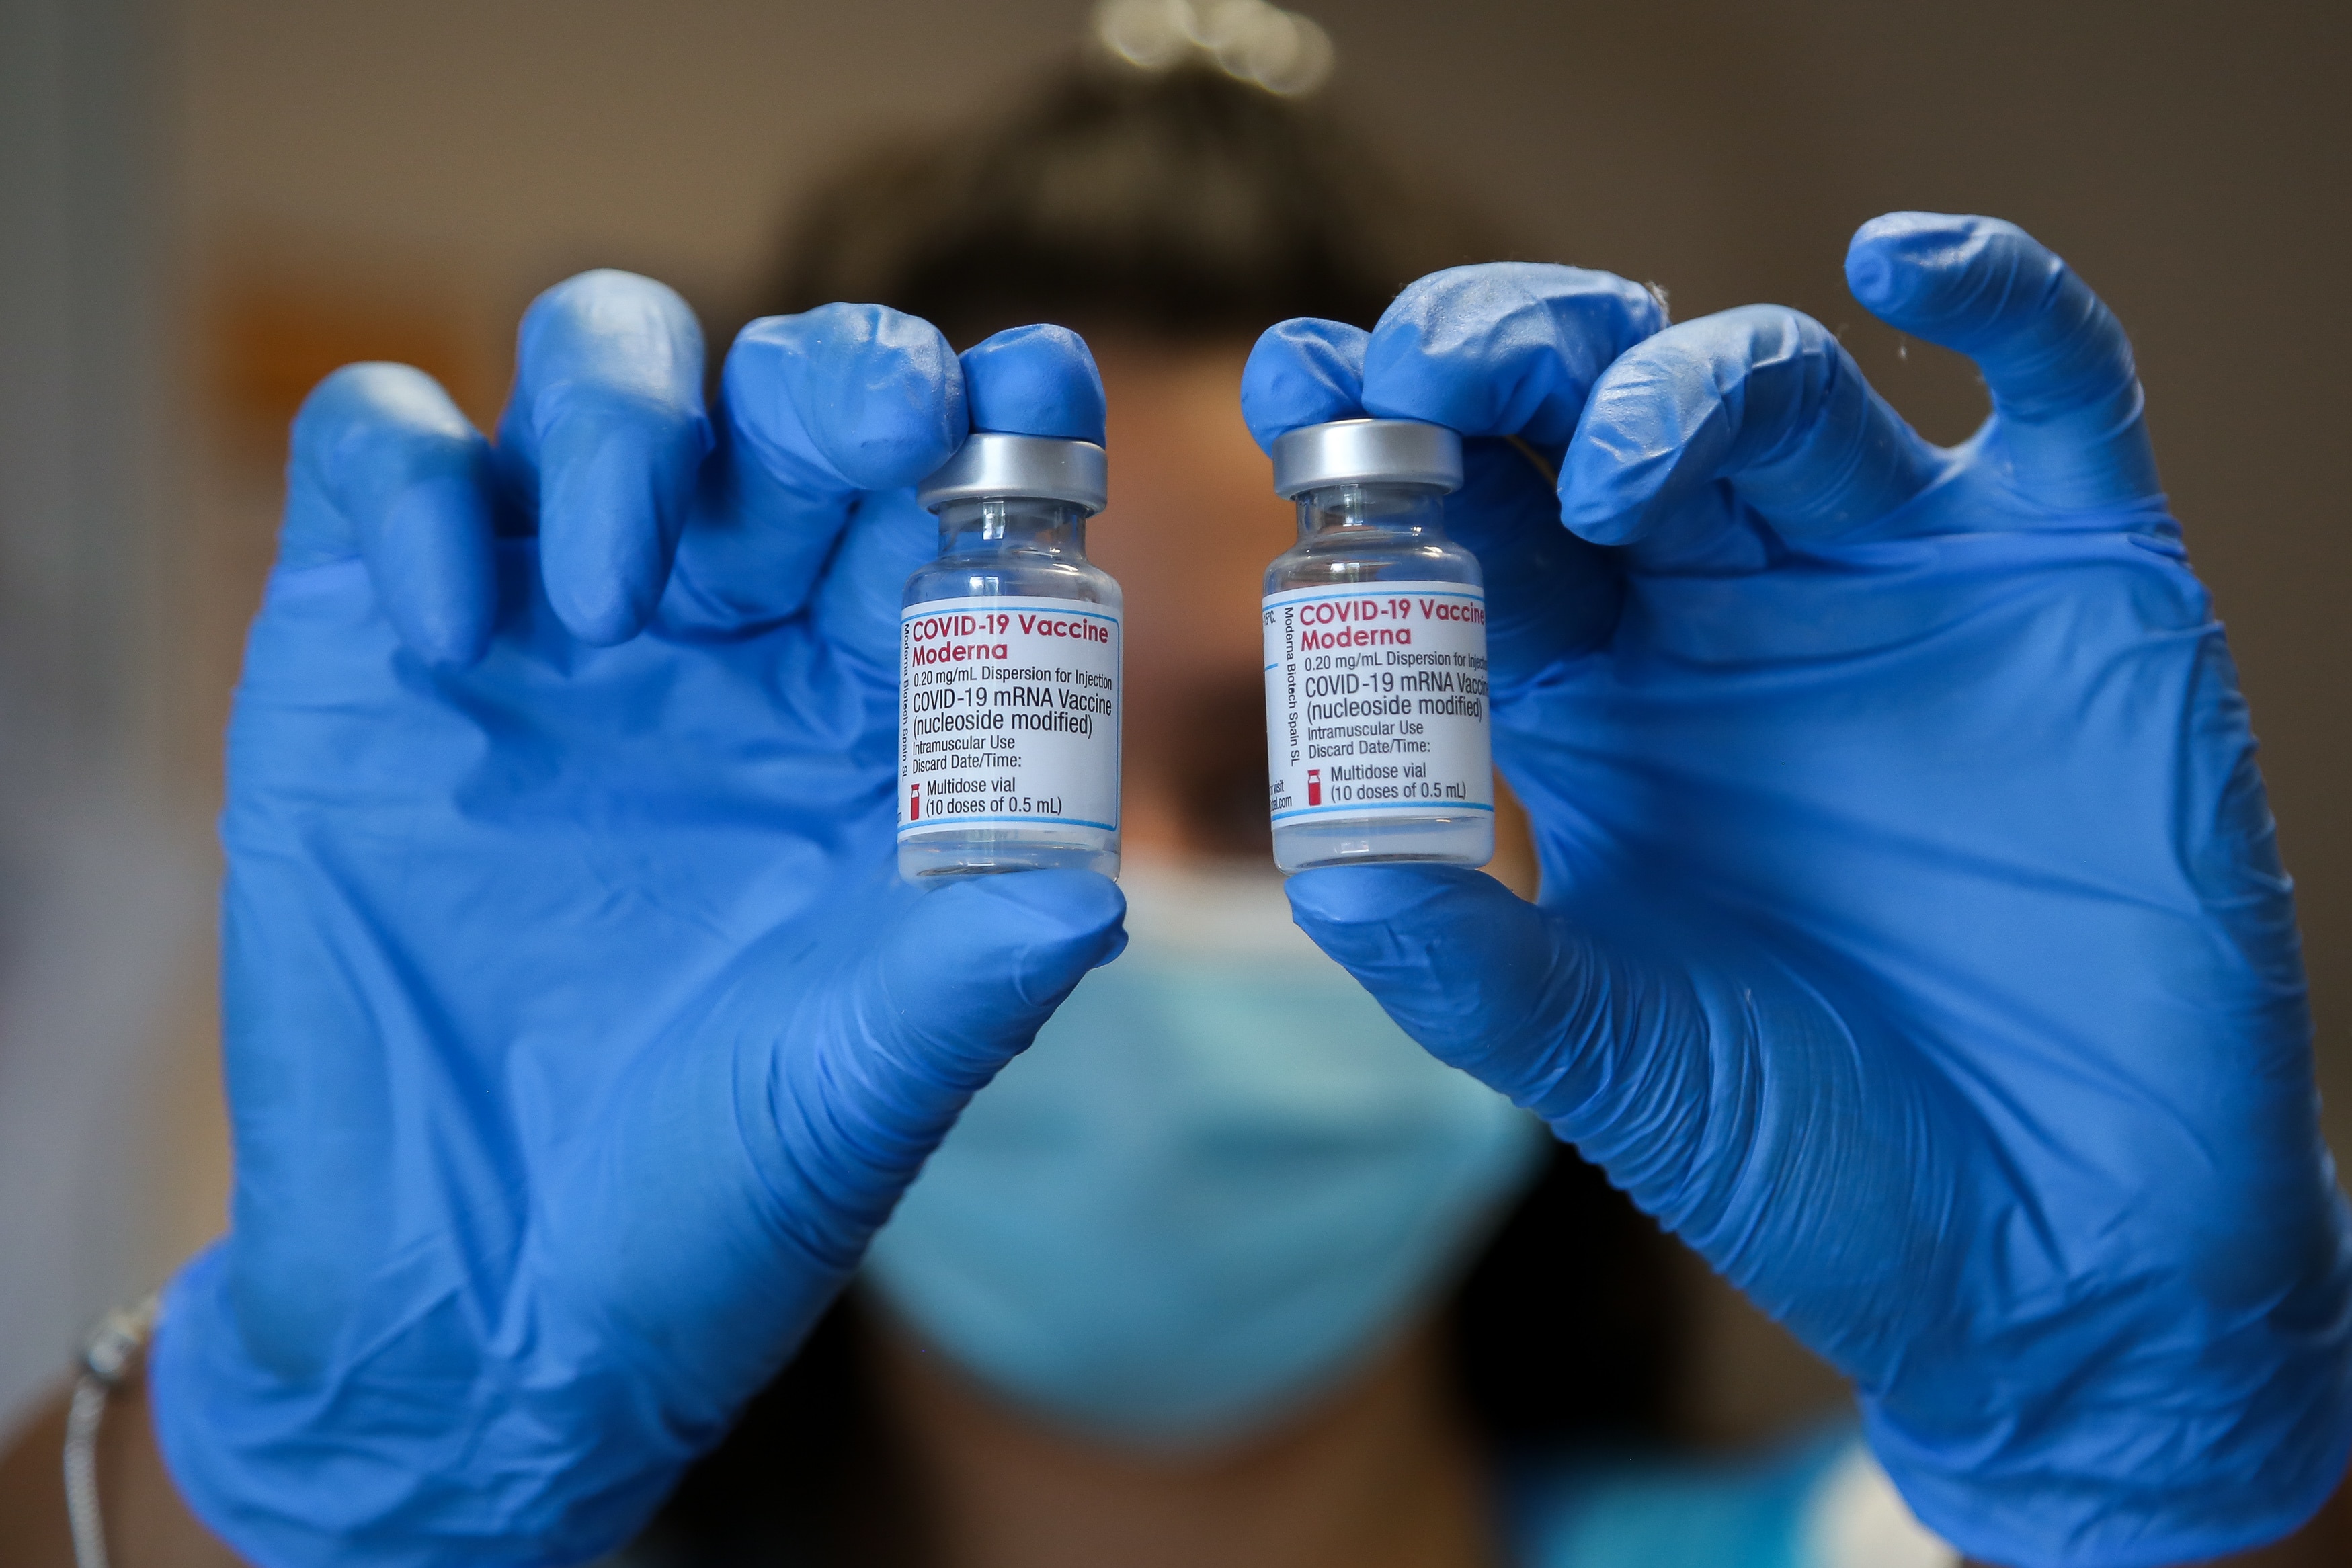 Australia's TGA has given the Moderna COVID-19 vaccine provisional approval.